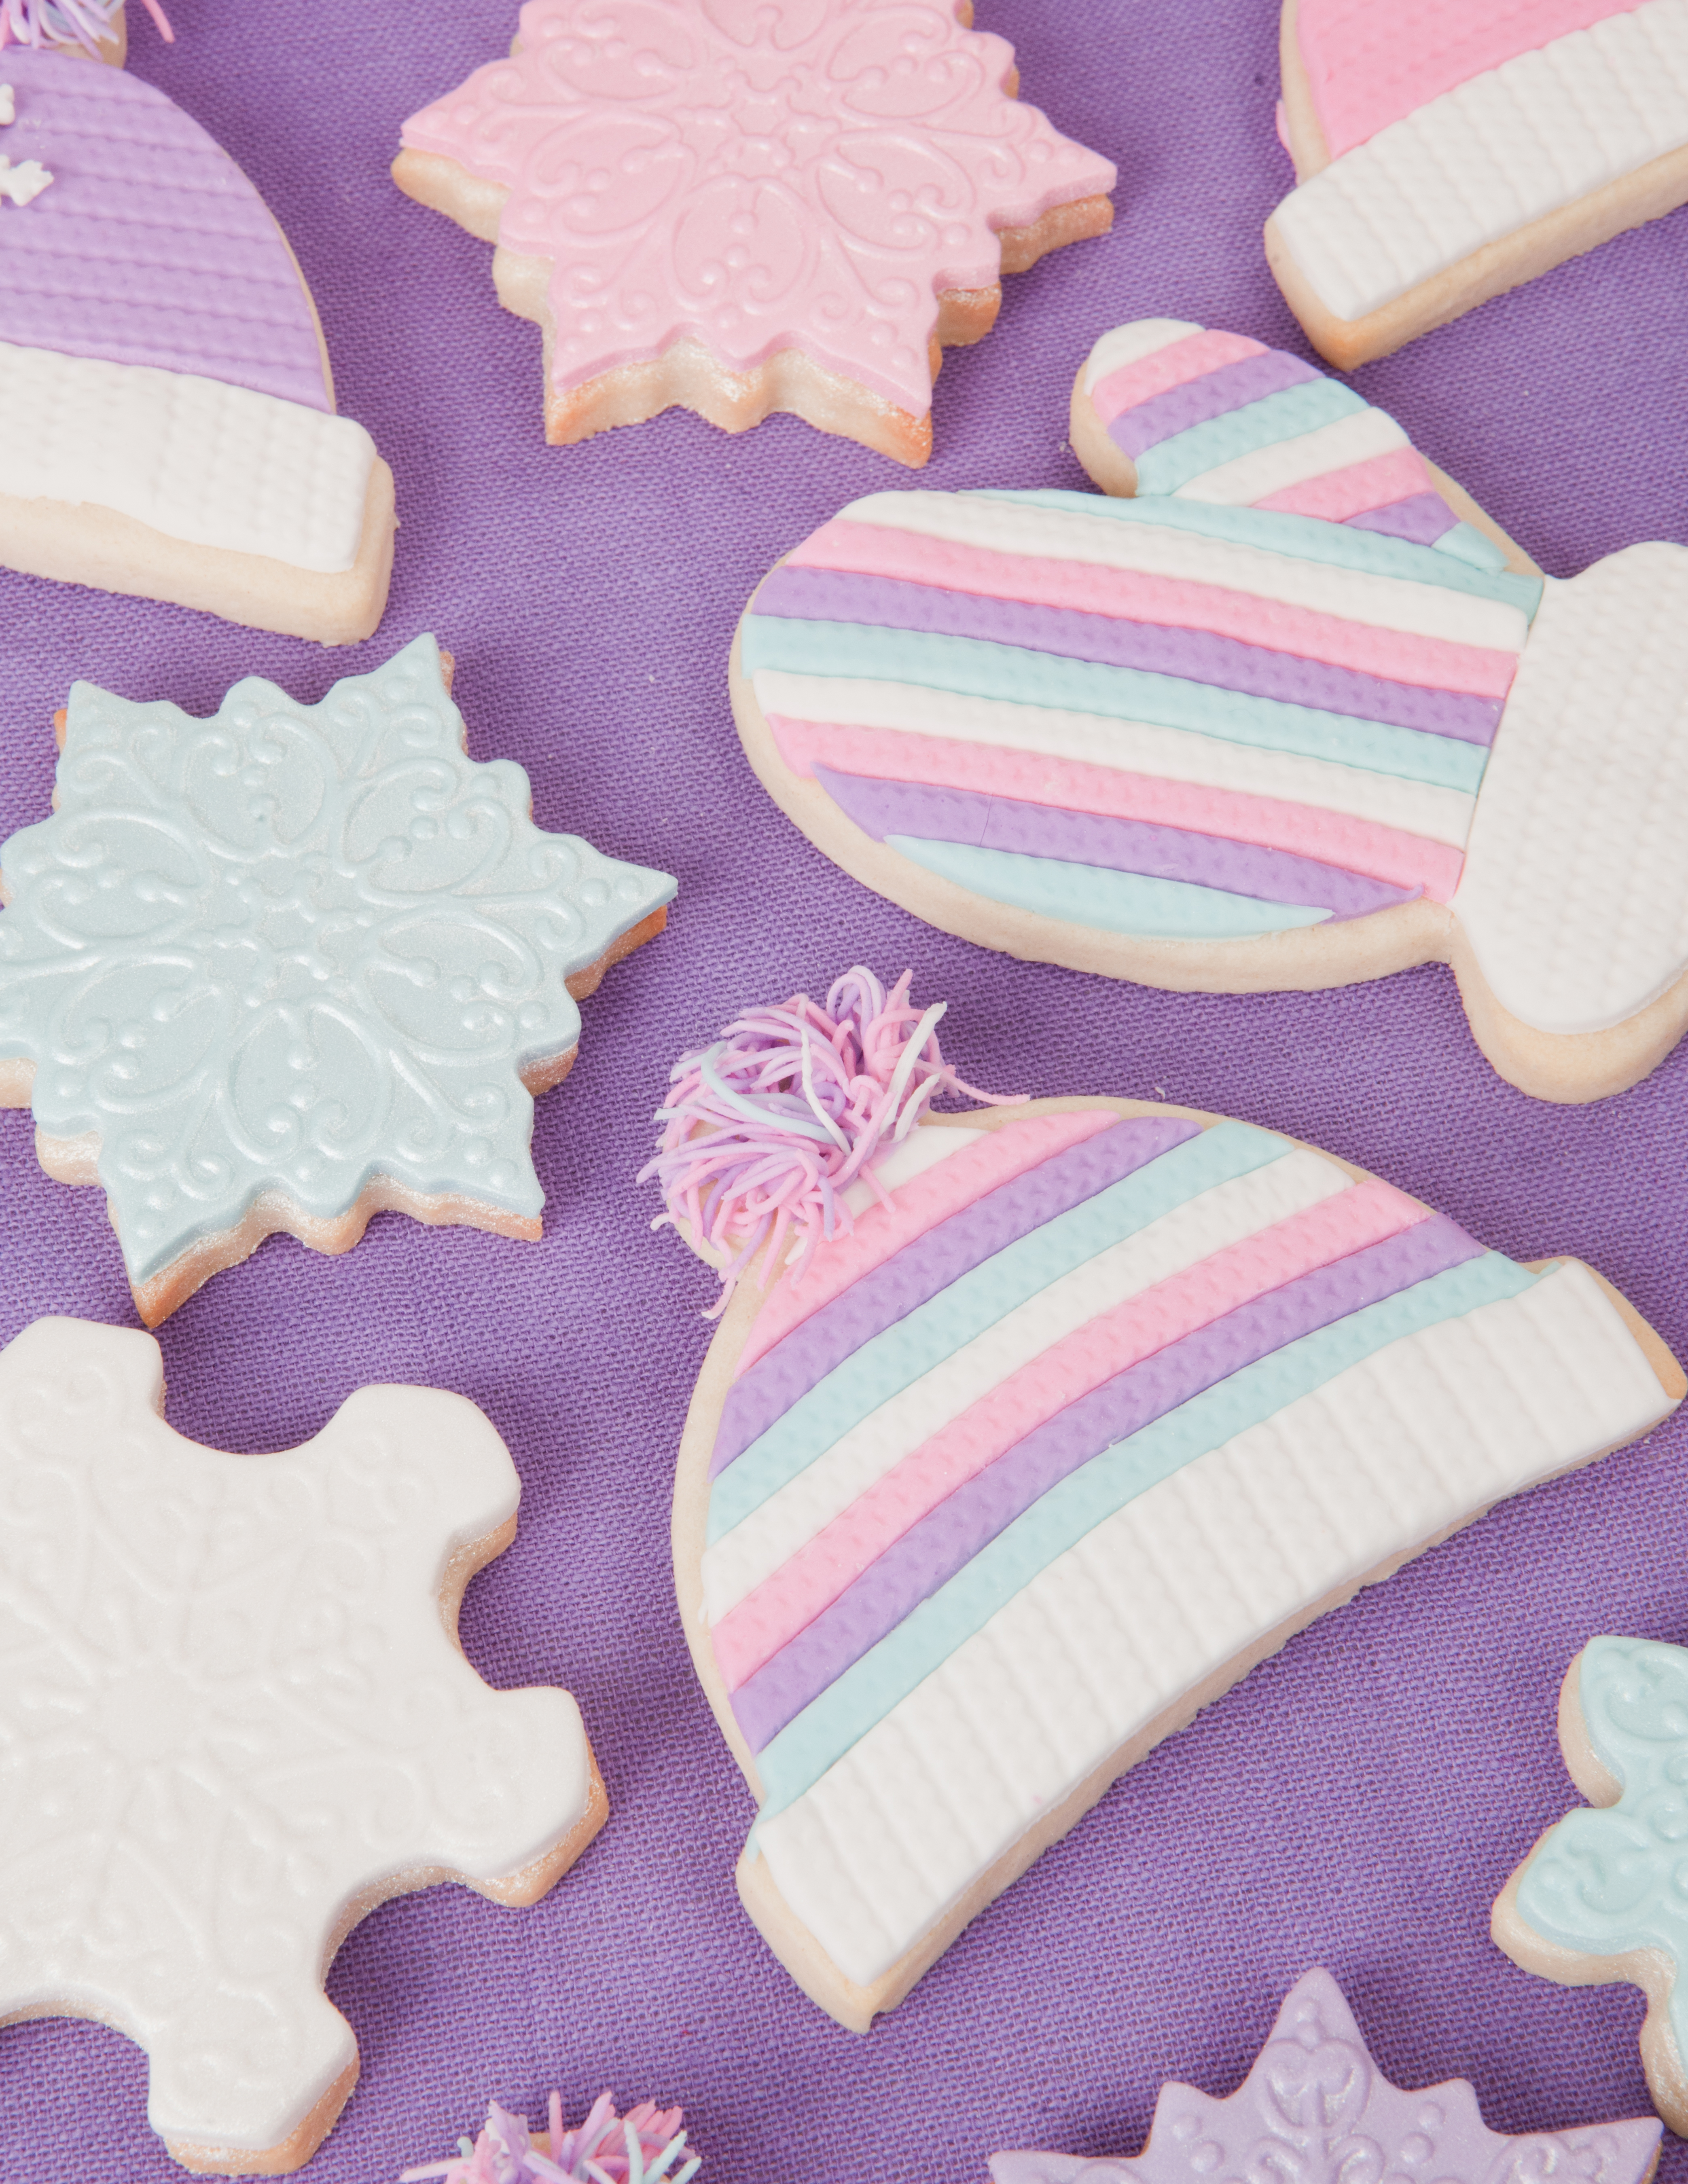 winter cookies | Cookie Decorating